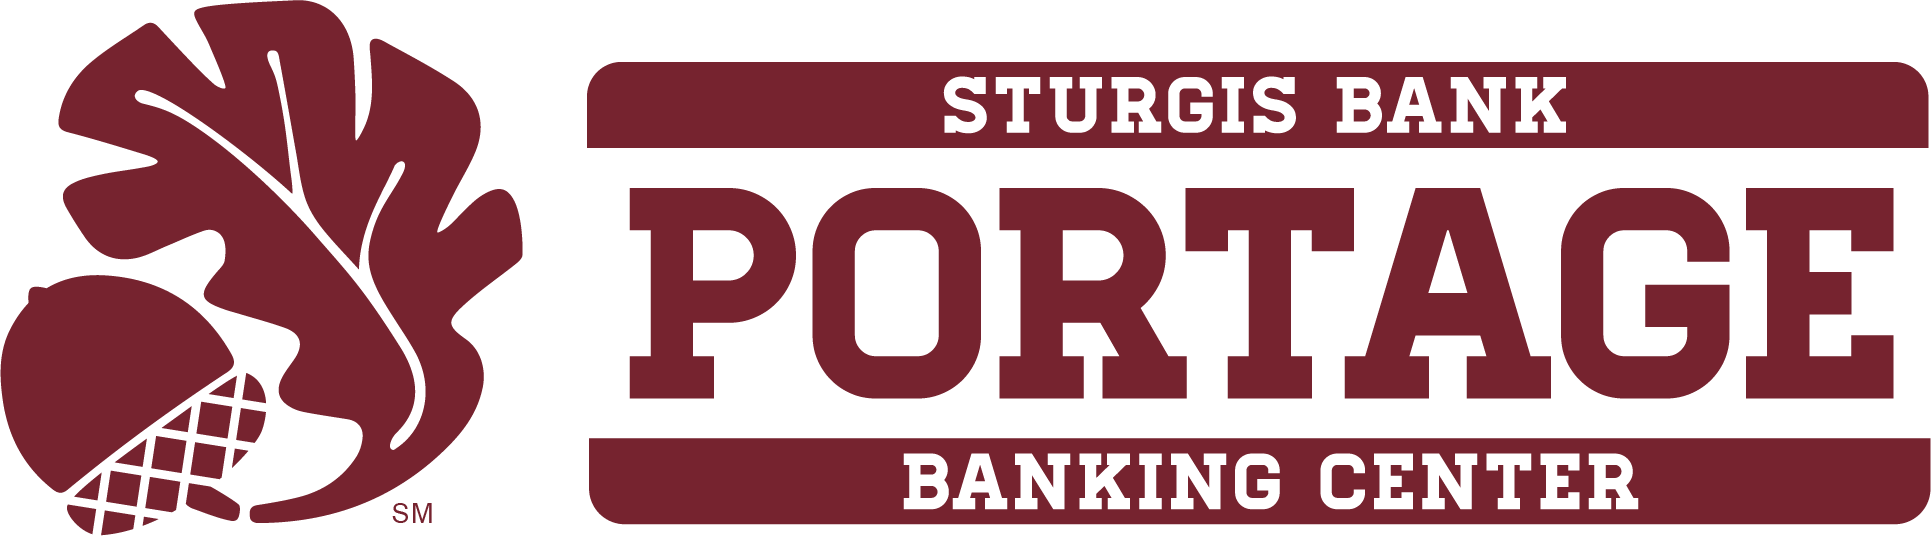 sturgisbank-Portage-logo-red-horiz.png